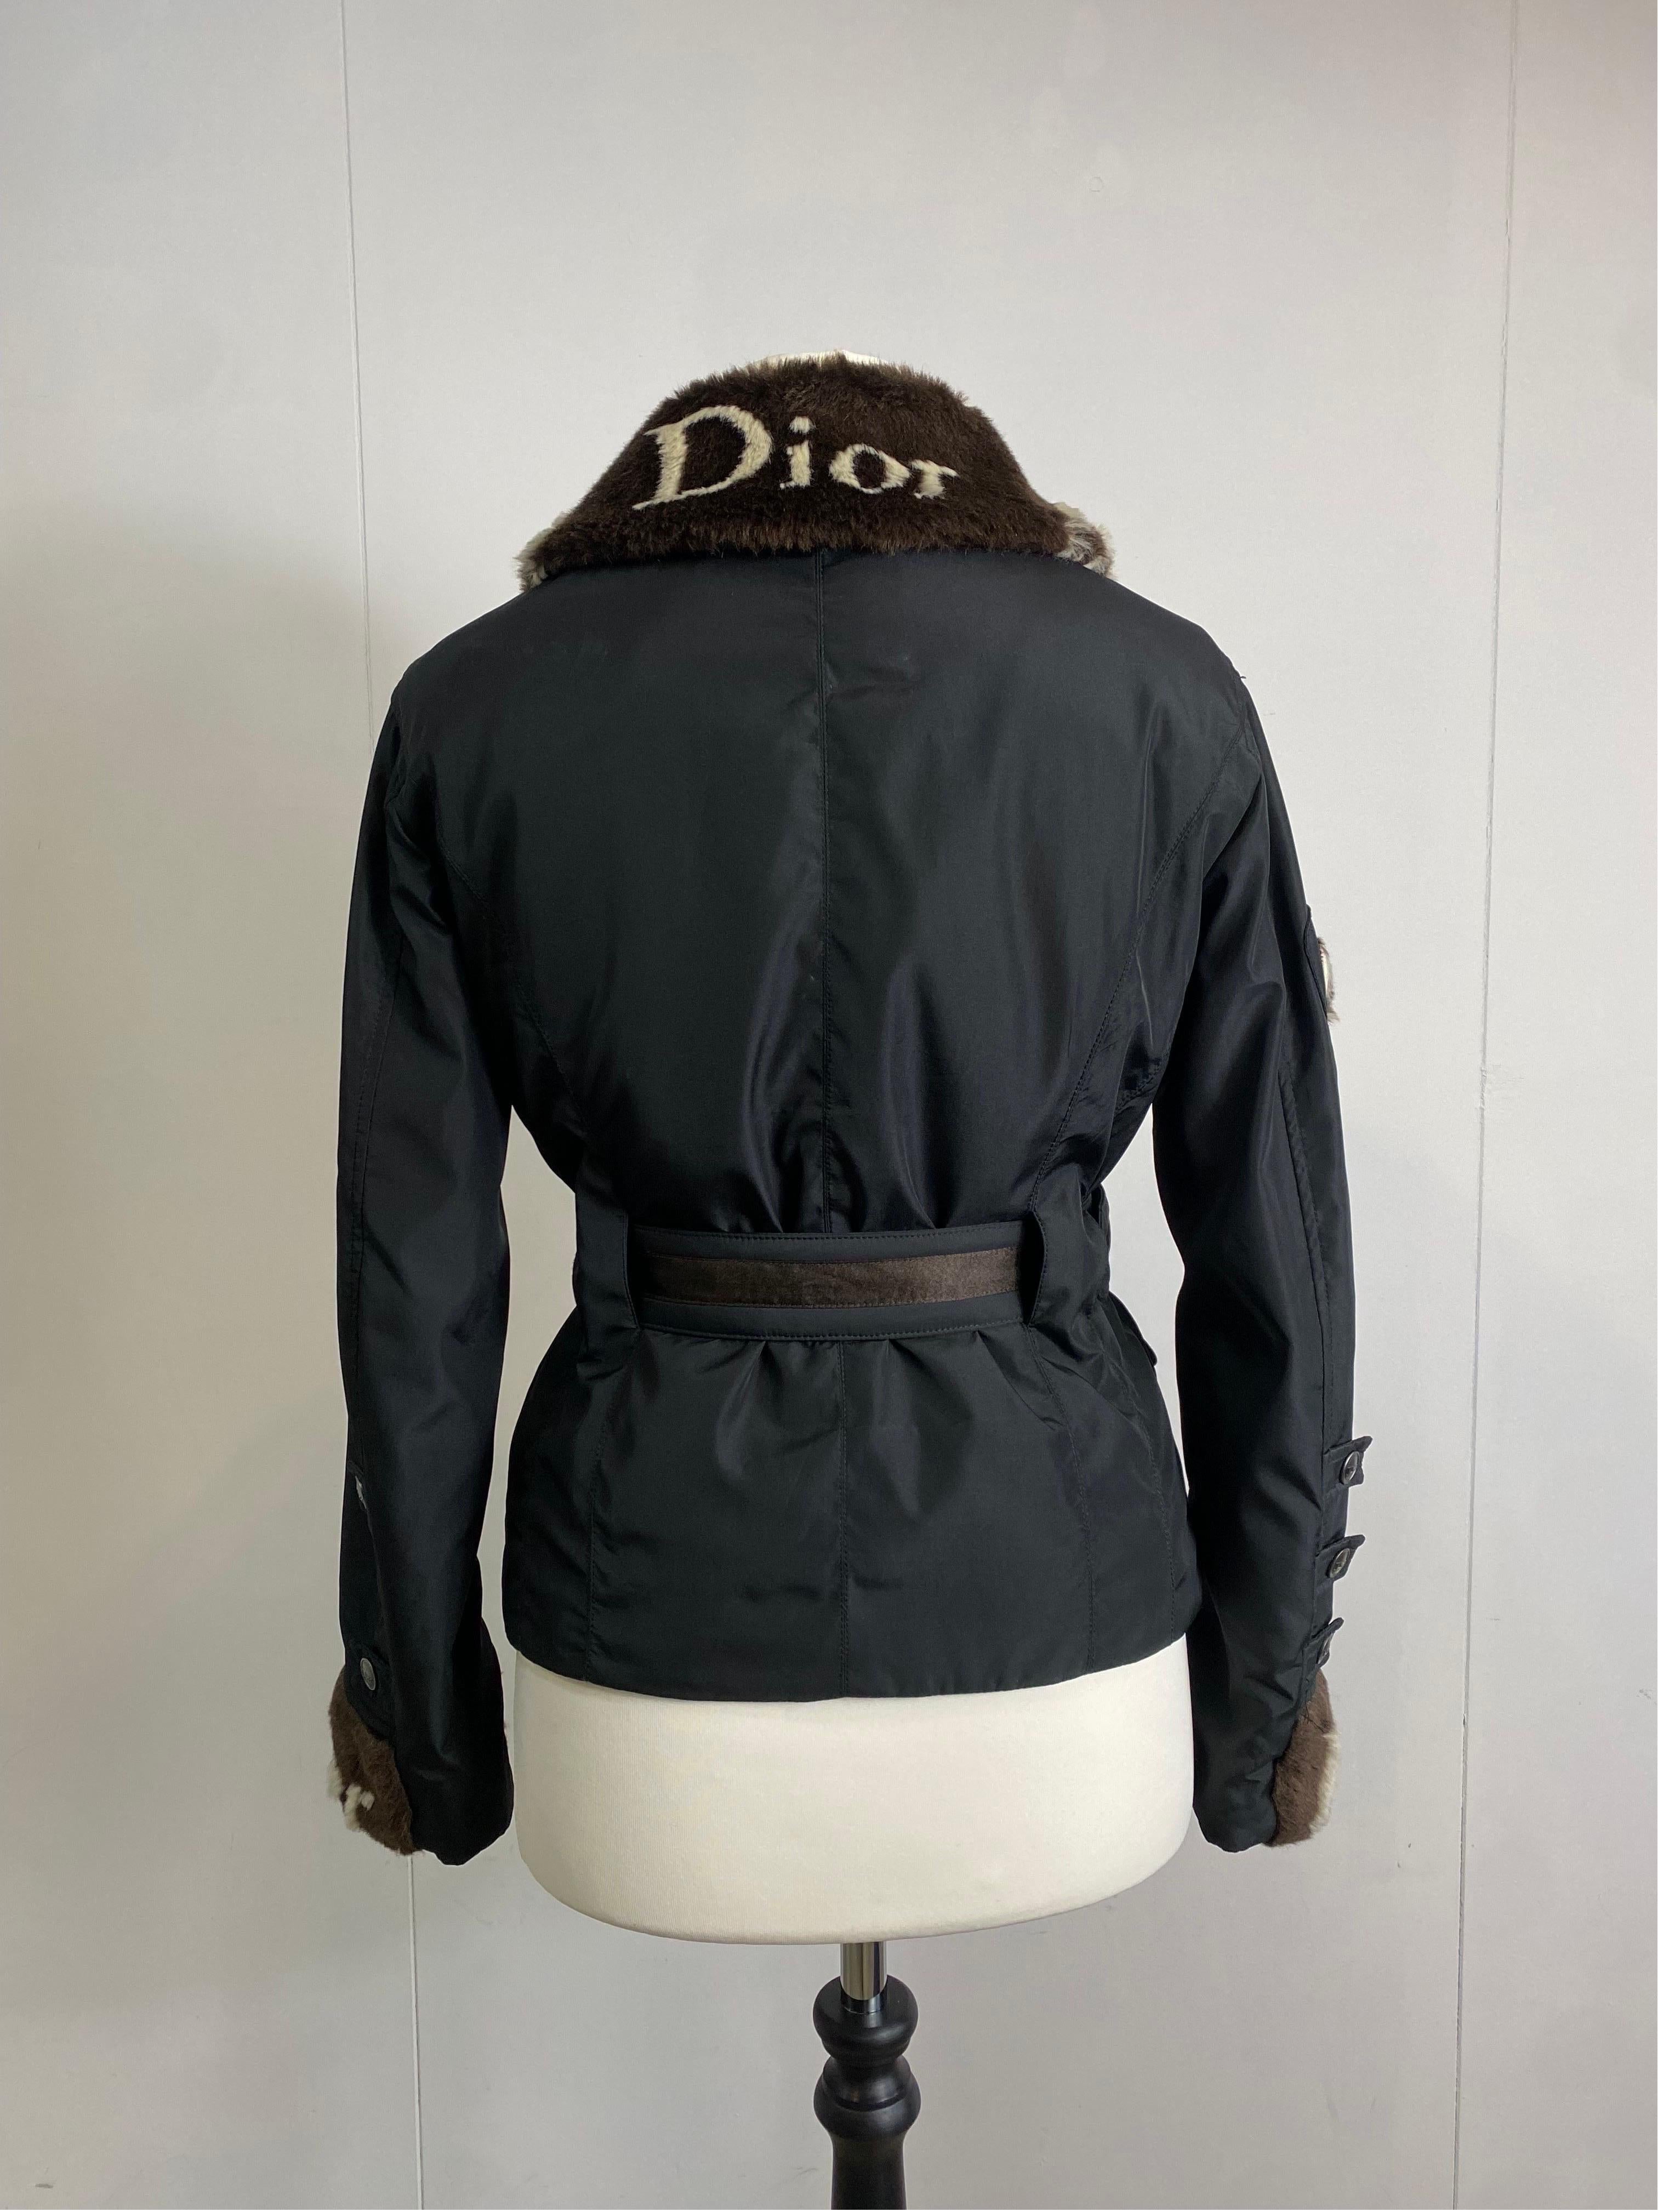 Christian Dior eco fur heart winter jacket For Sale 2